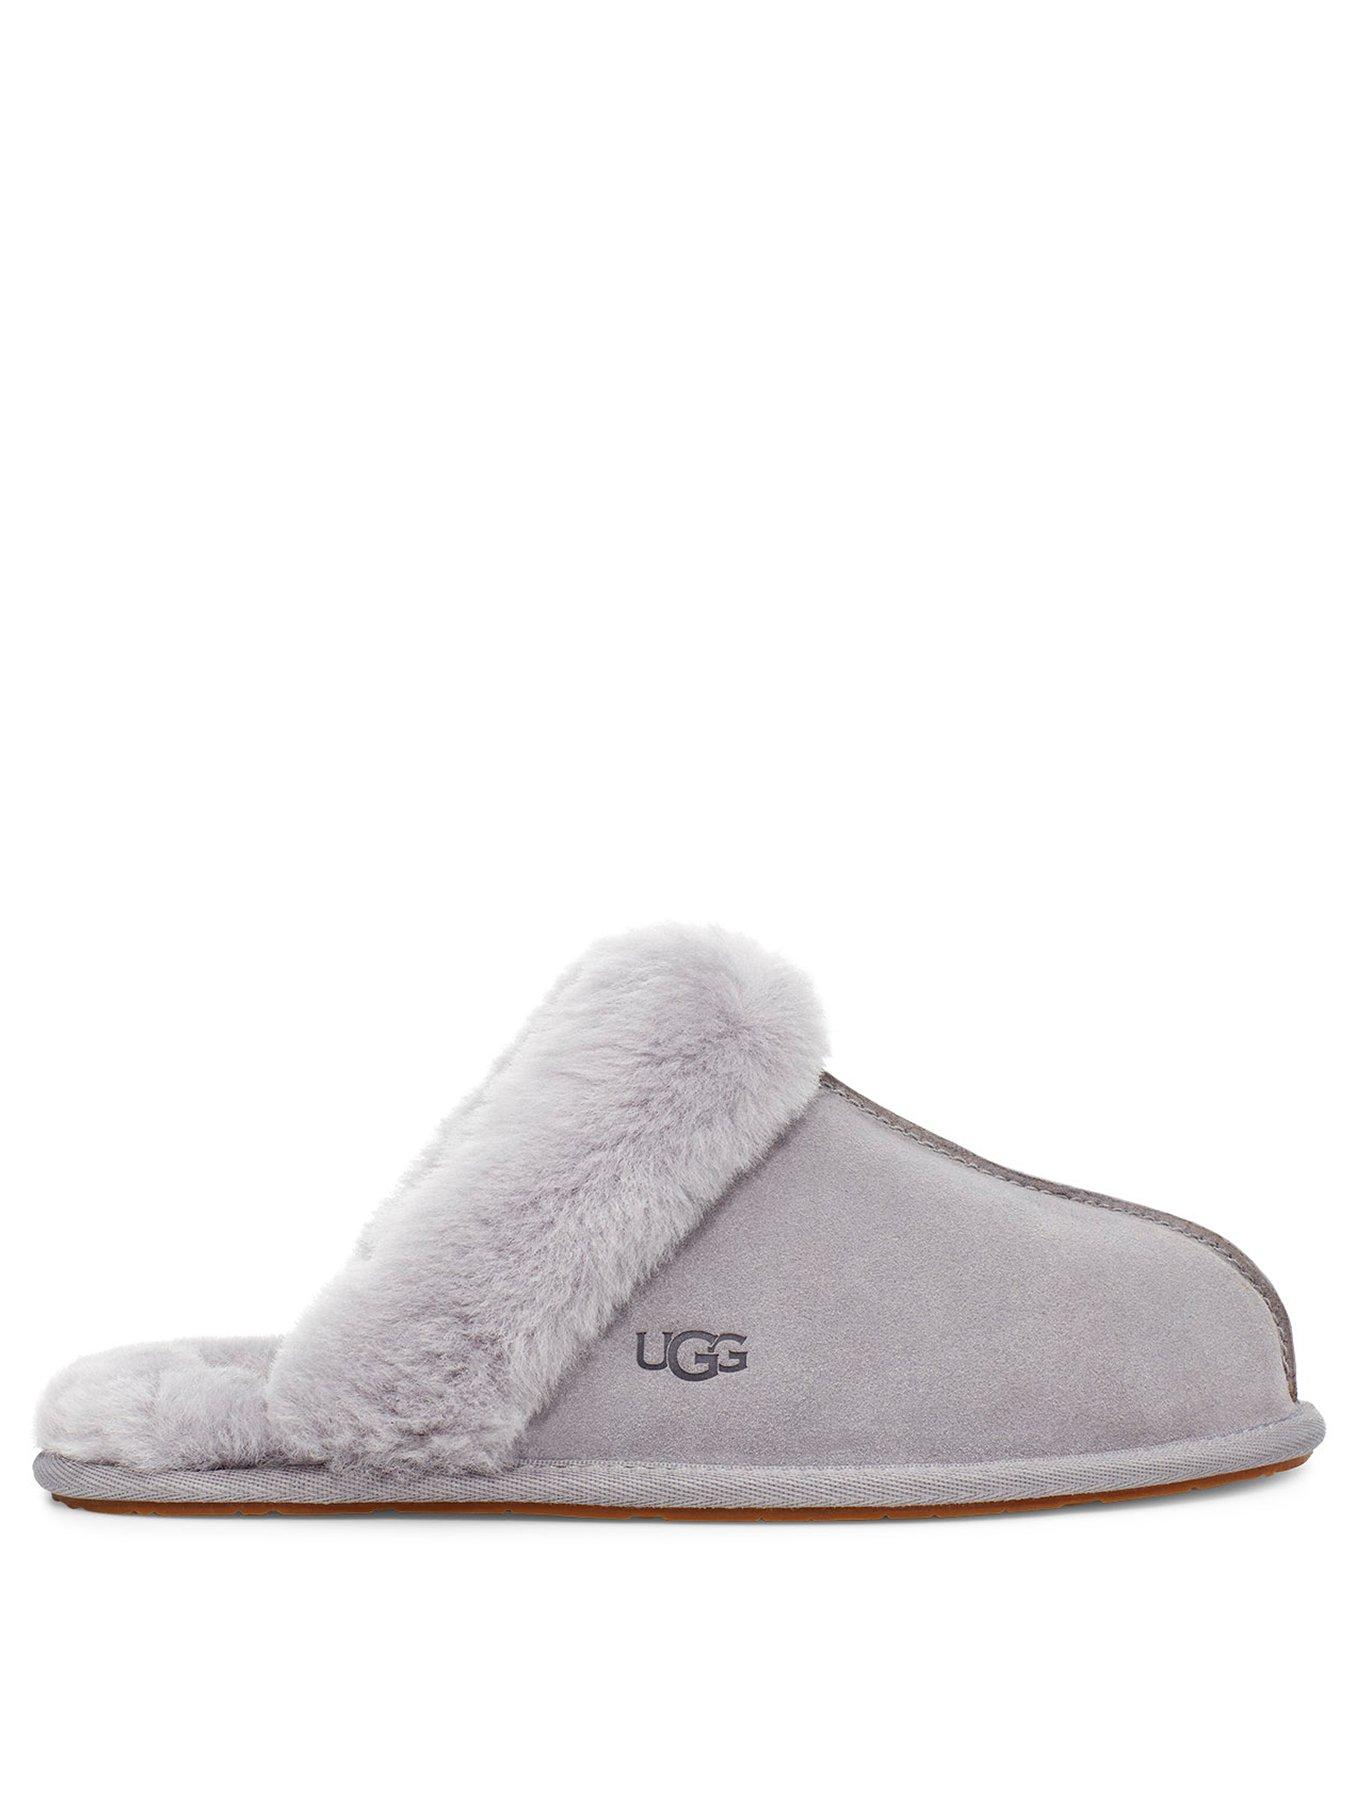 grey ugg slippers - ampamariamoliner 